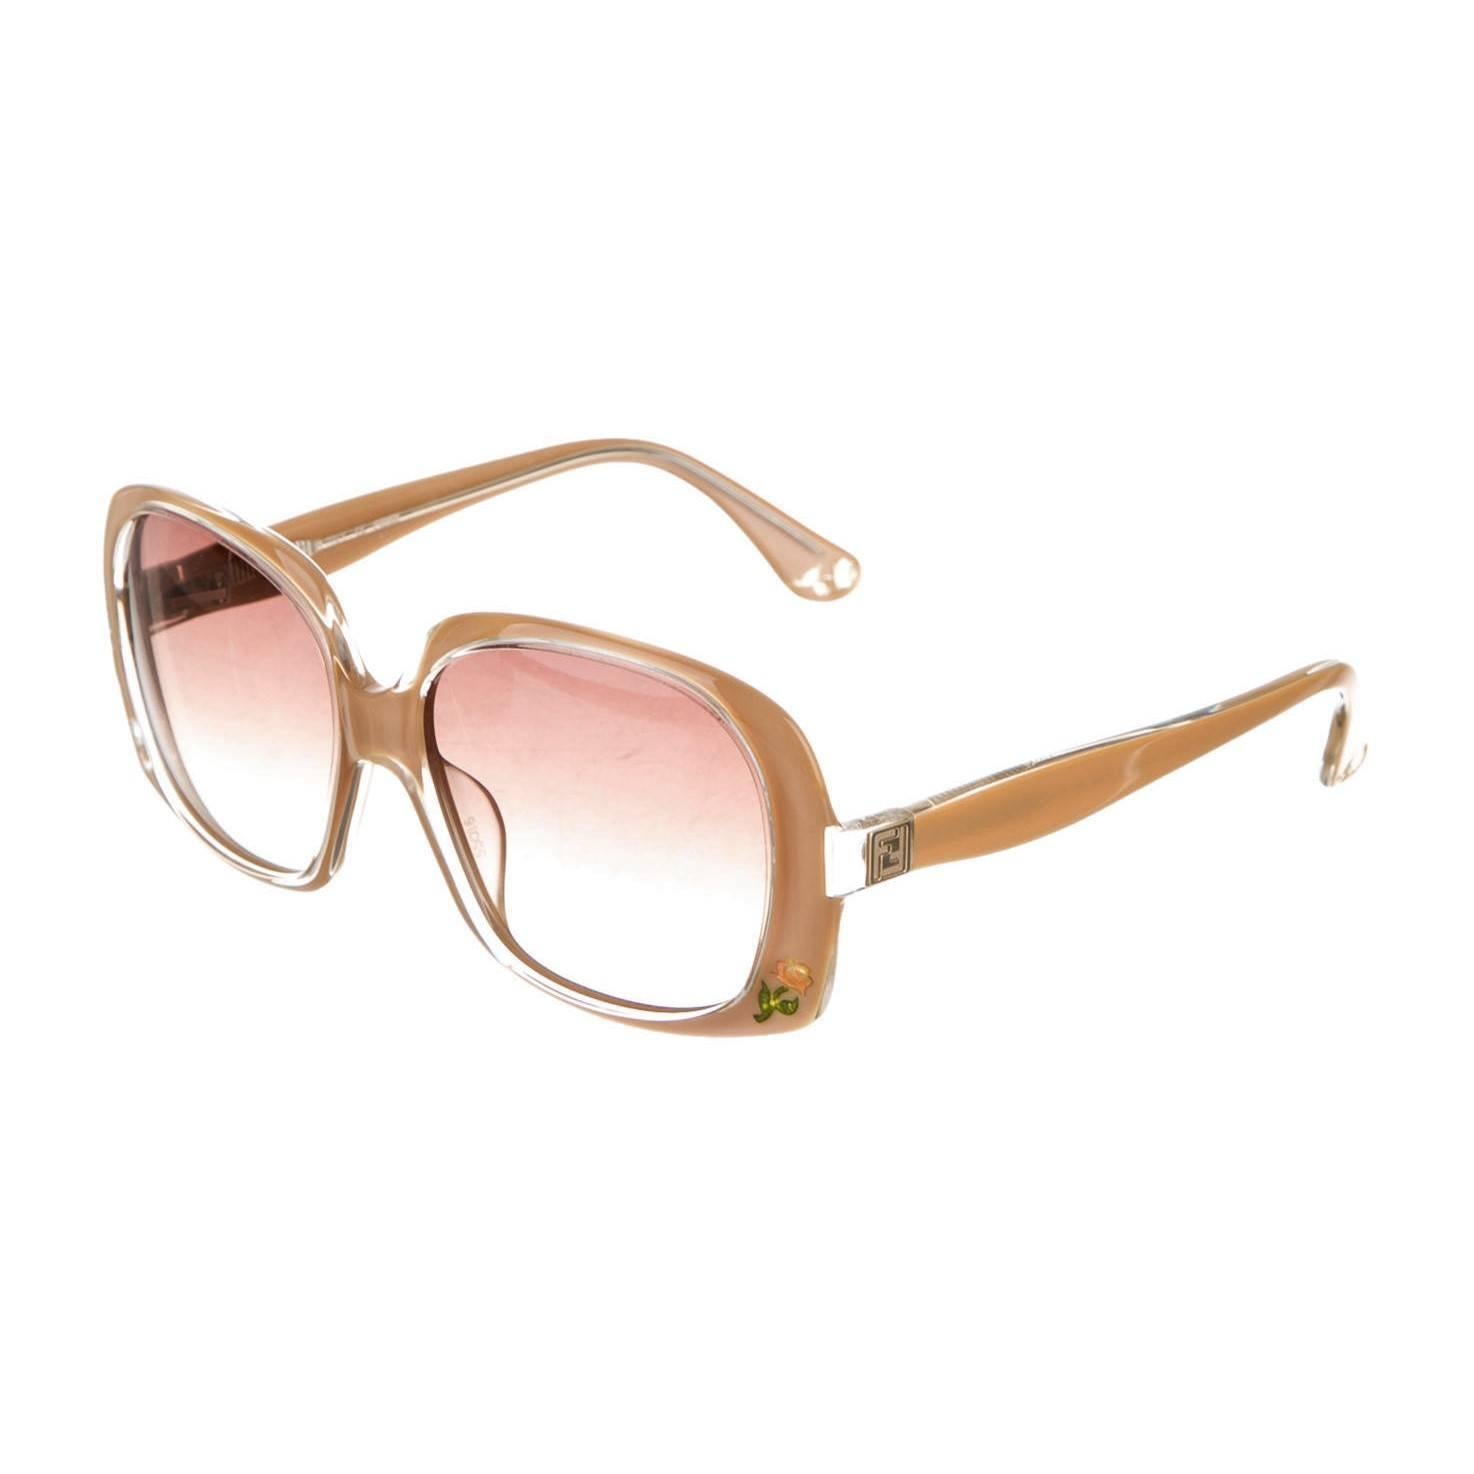 New Fendi Beige Rose Inlaid Sunglasses With Case 6